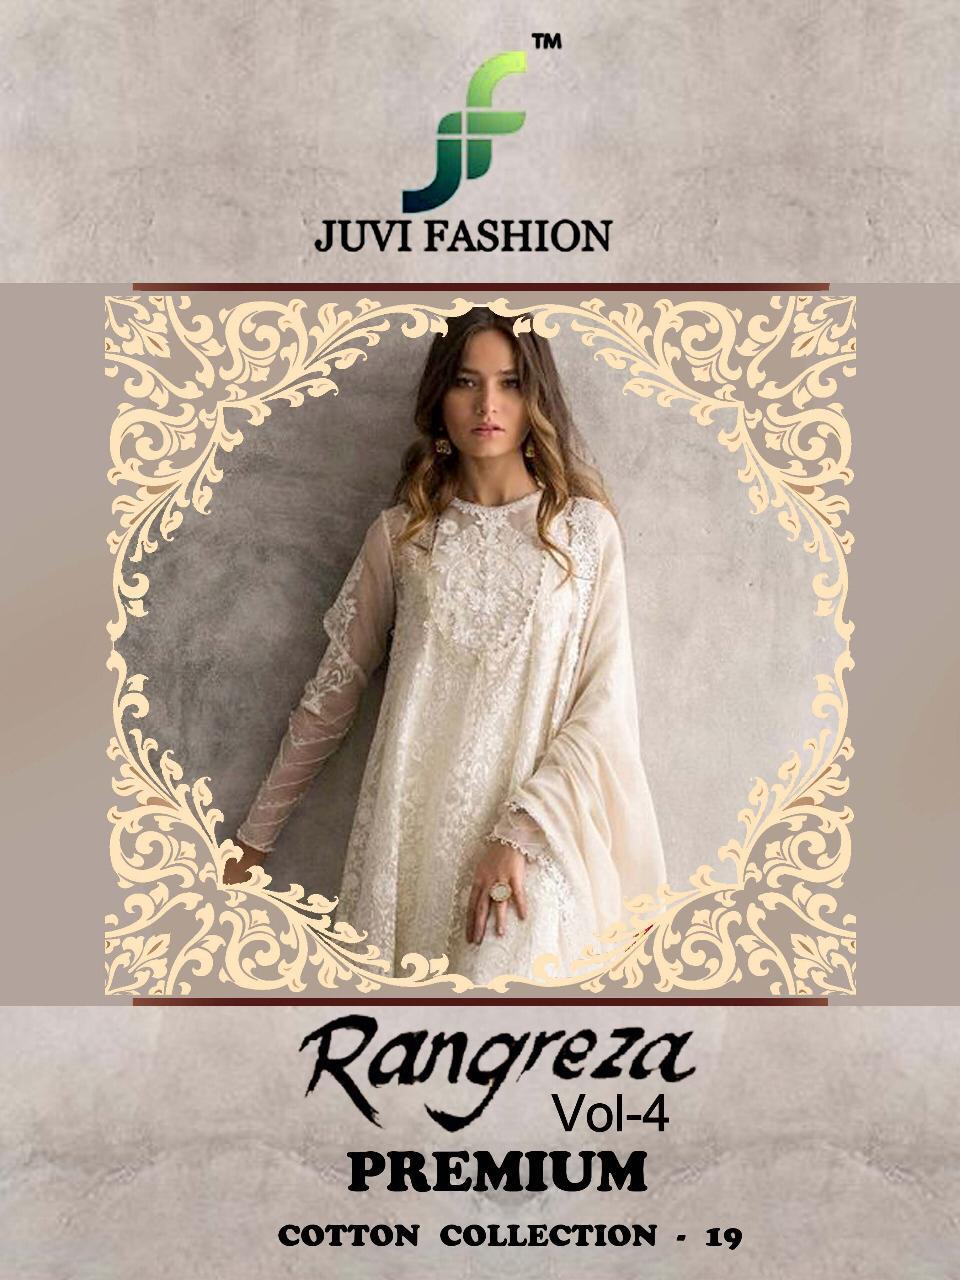 Juvi fashion rangreza vol 4 premium cotton collection 19 Cambric cotton Pakistani salwar kameez Collection